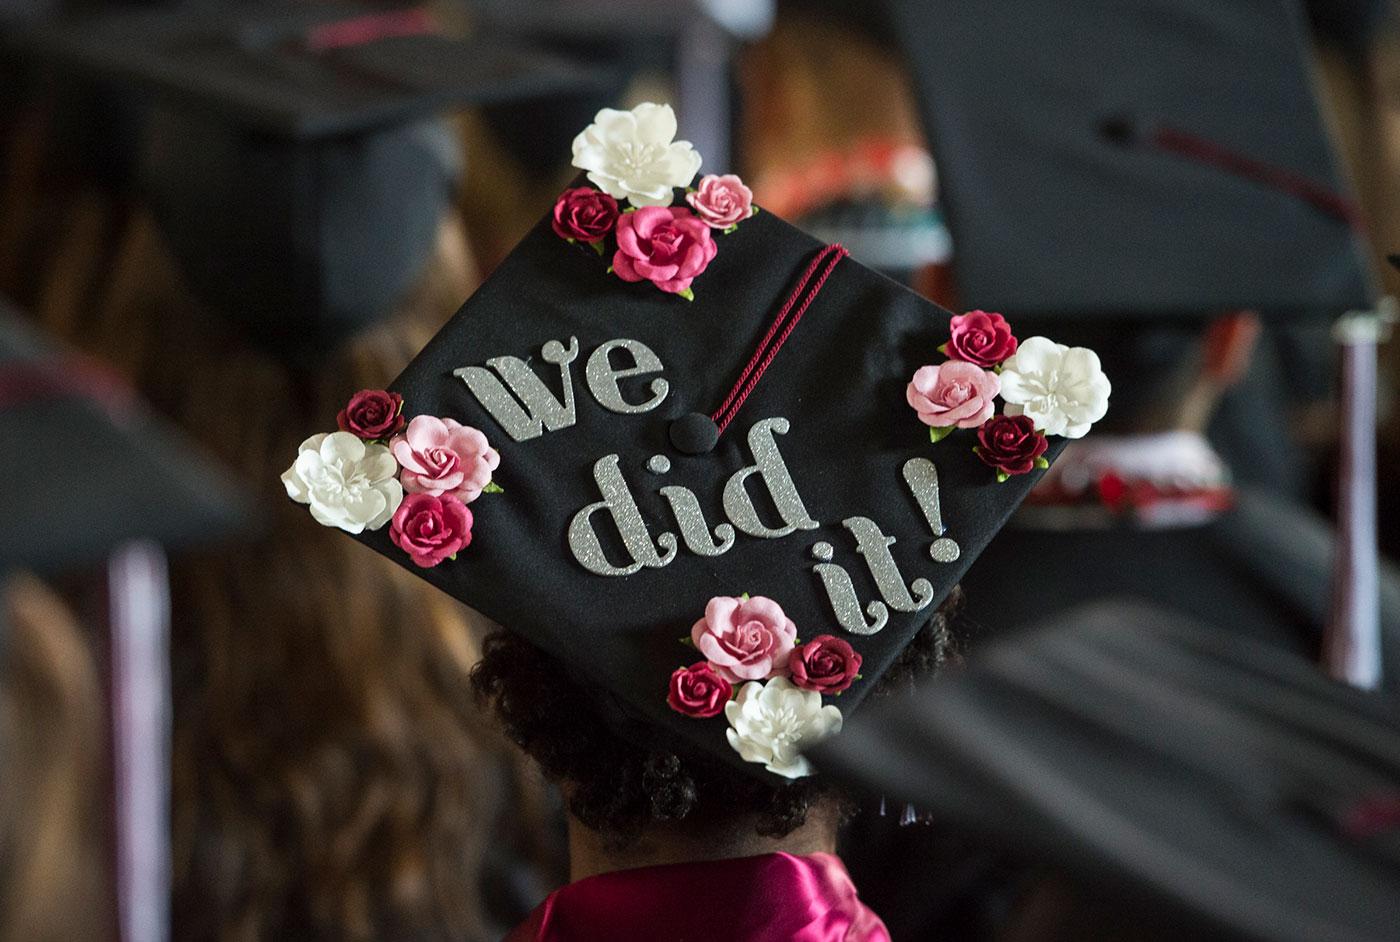 back of graduation cap reading "we did it!"